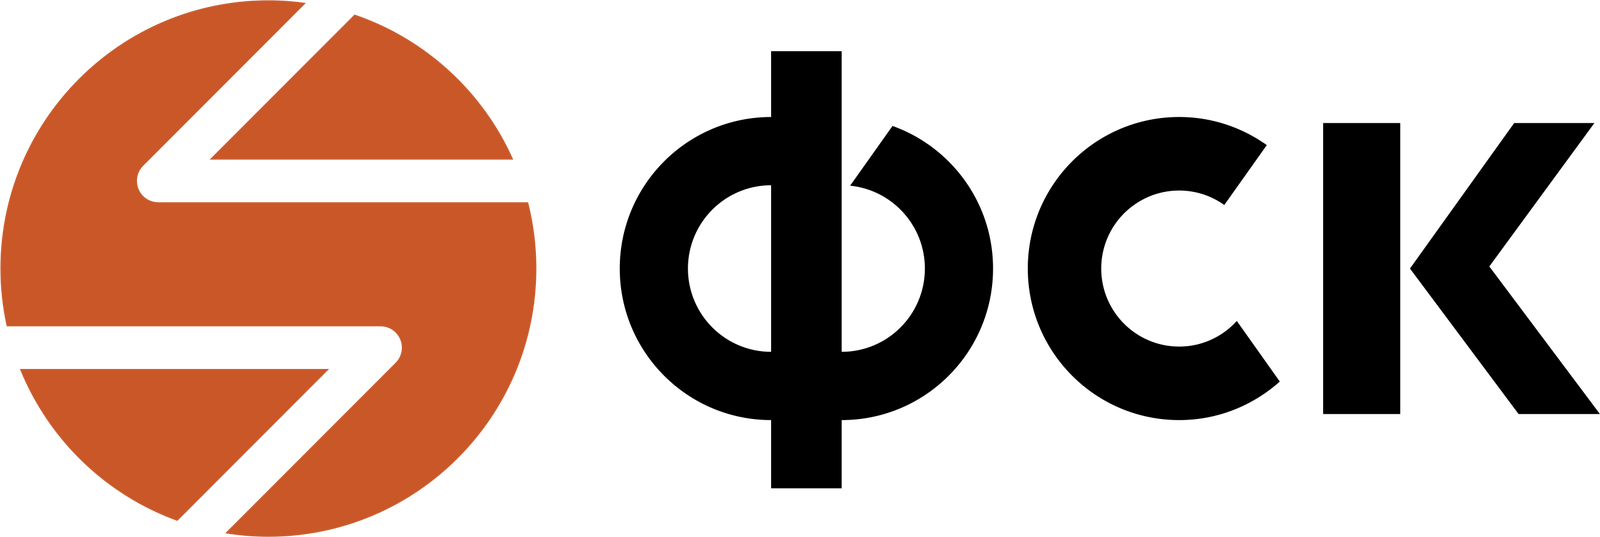 Логотип_ГК_ФСК.png